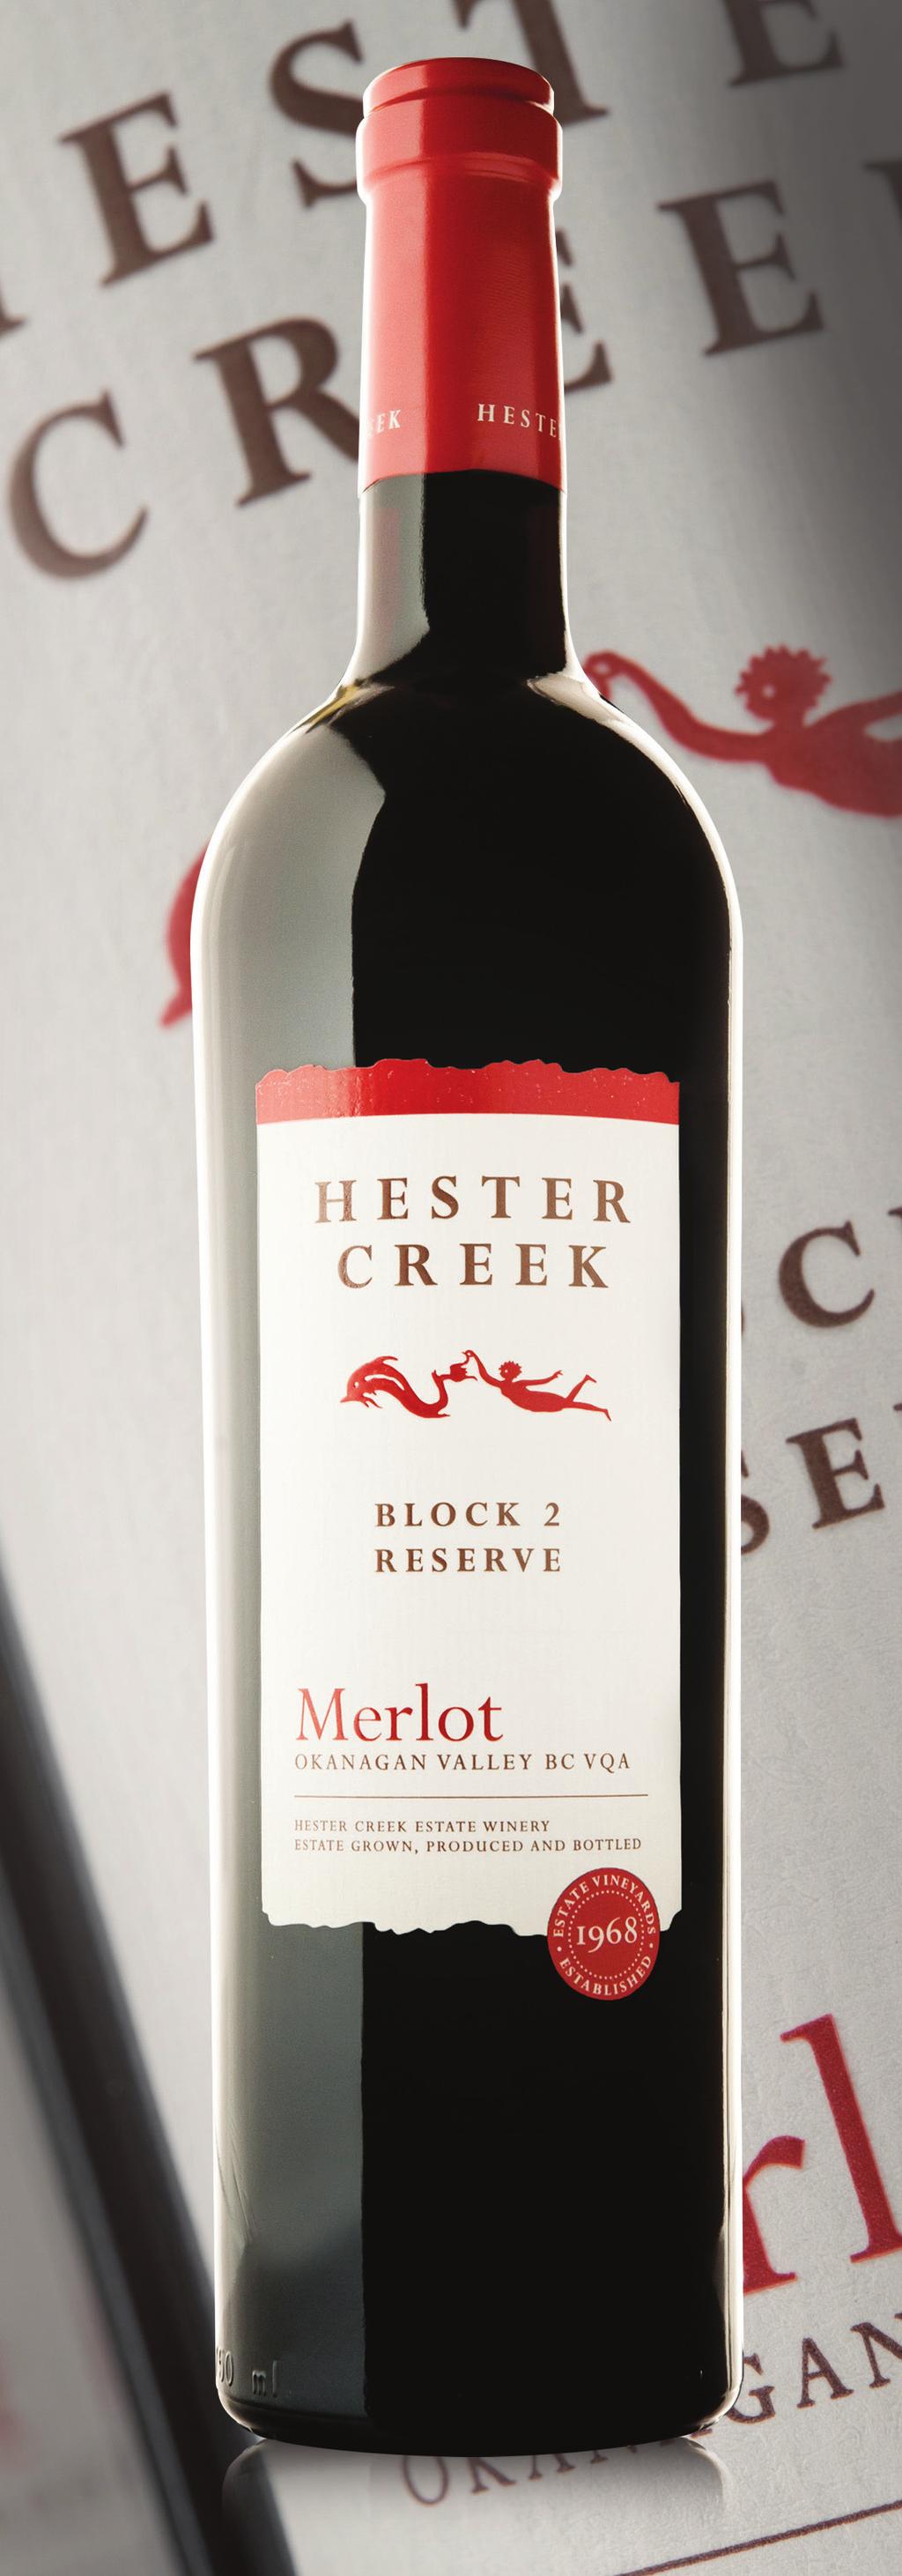 Hester Creek Estate Winery PO Box 1605, Oliver, British Columbia 1.866.498.4435 info@hestercreek.com www.hestercreek.com Reserve Merlot Block 2 Vintage: 2012 Price: $28.